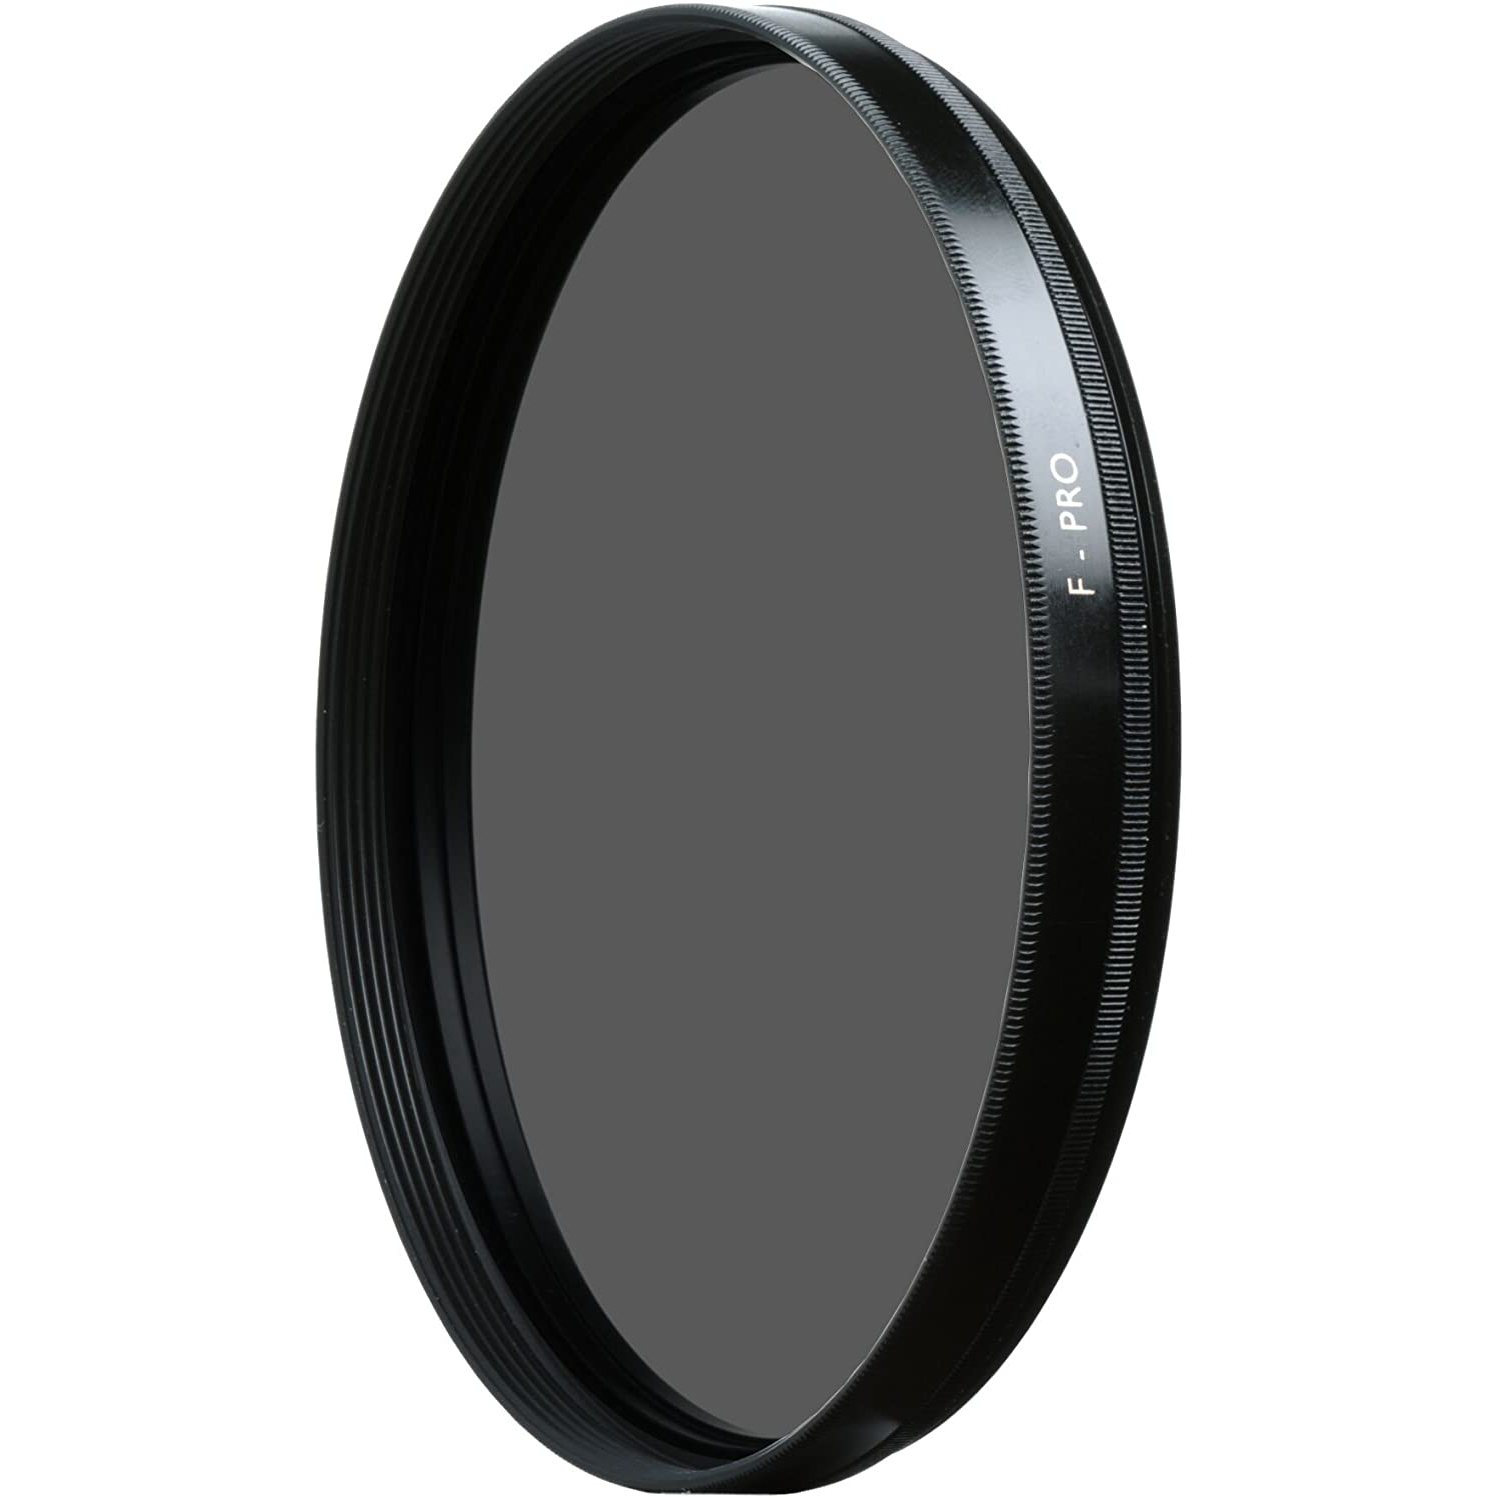 B+W Filter Circular Polarizer - 52mm